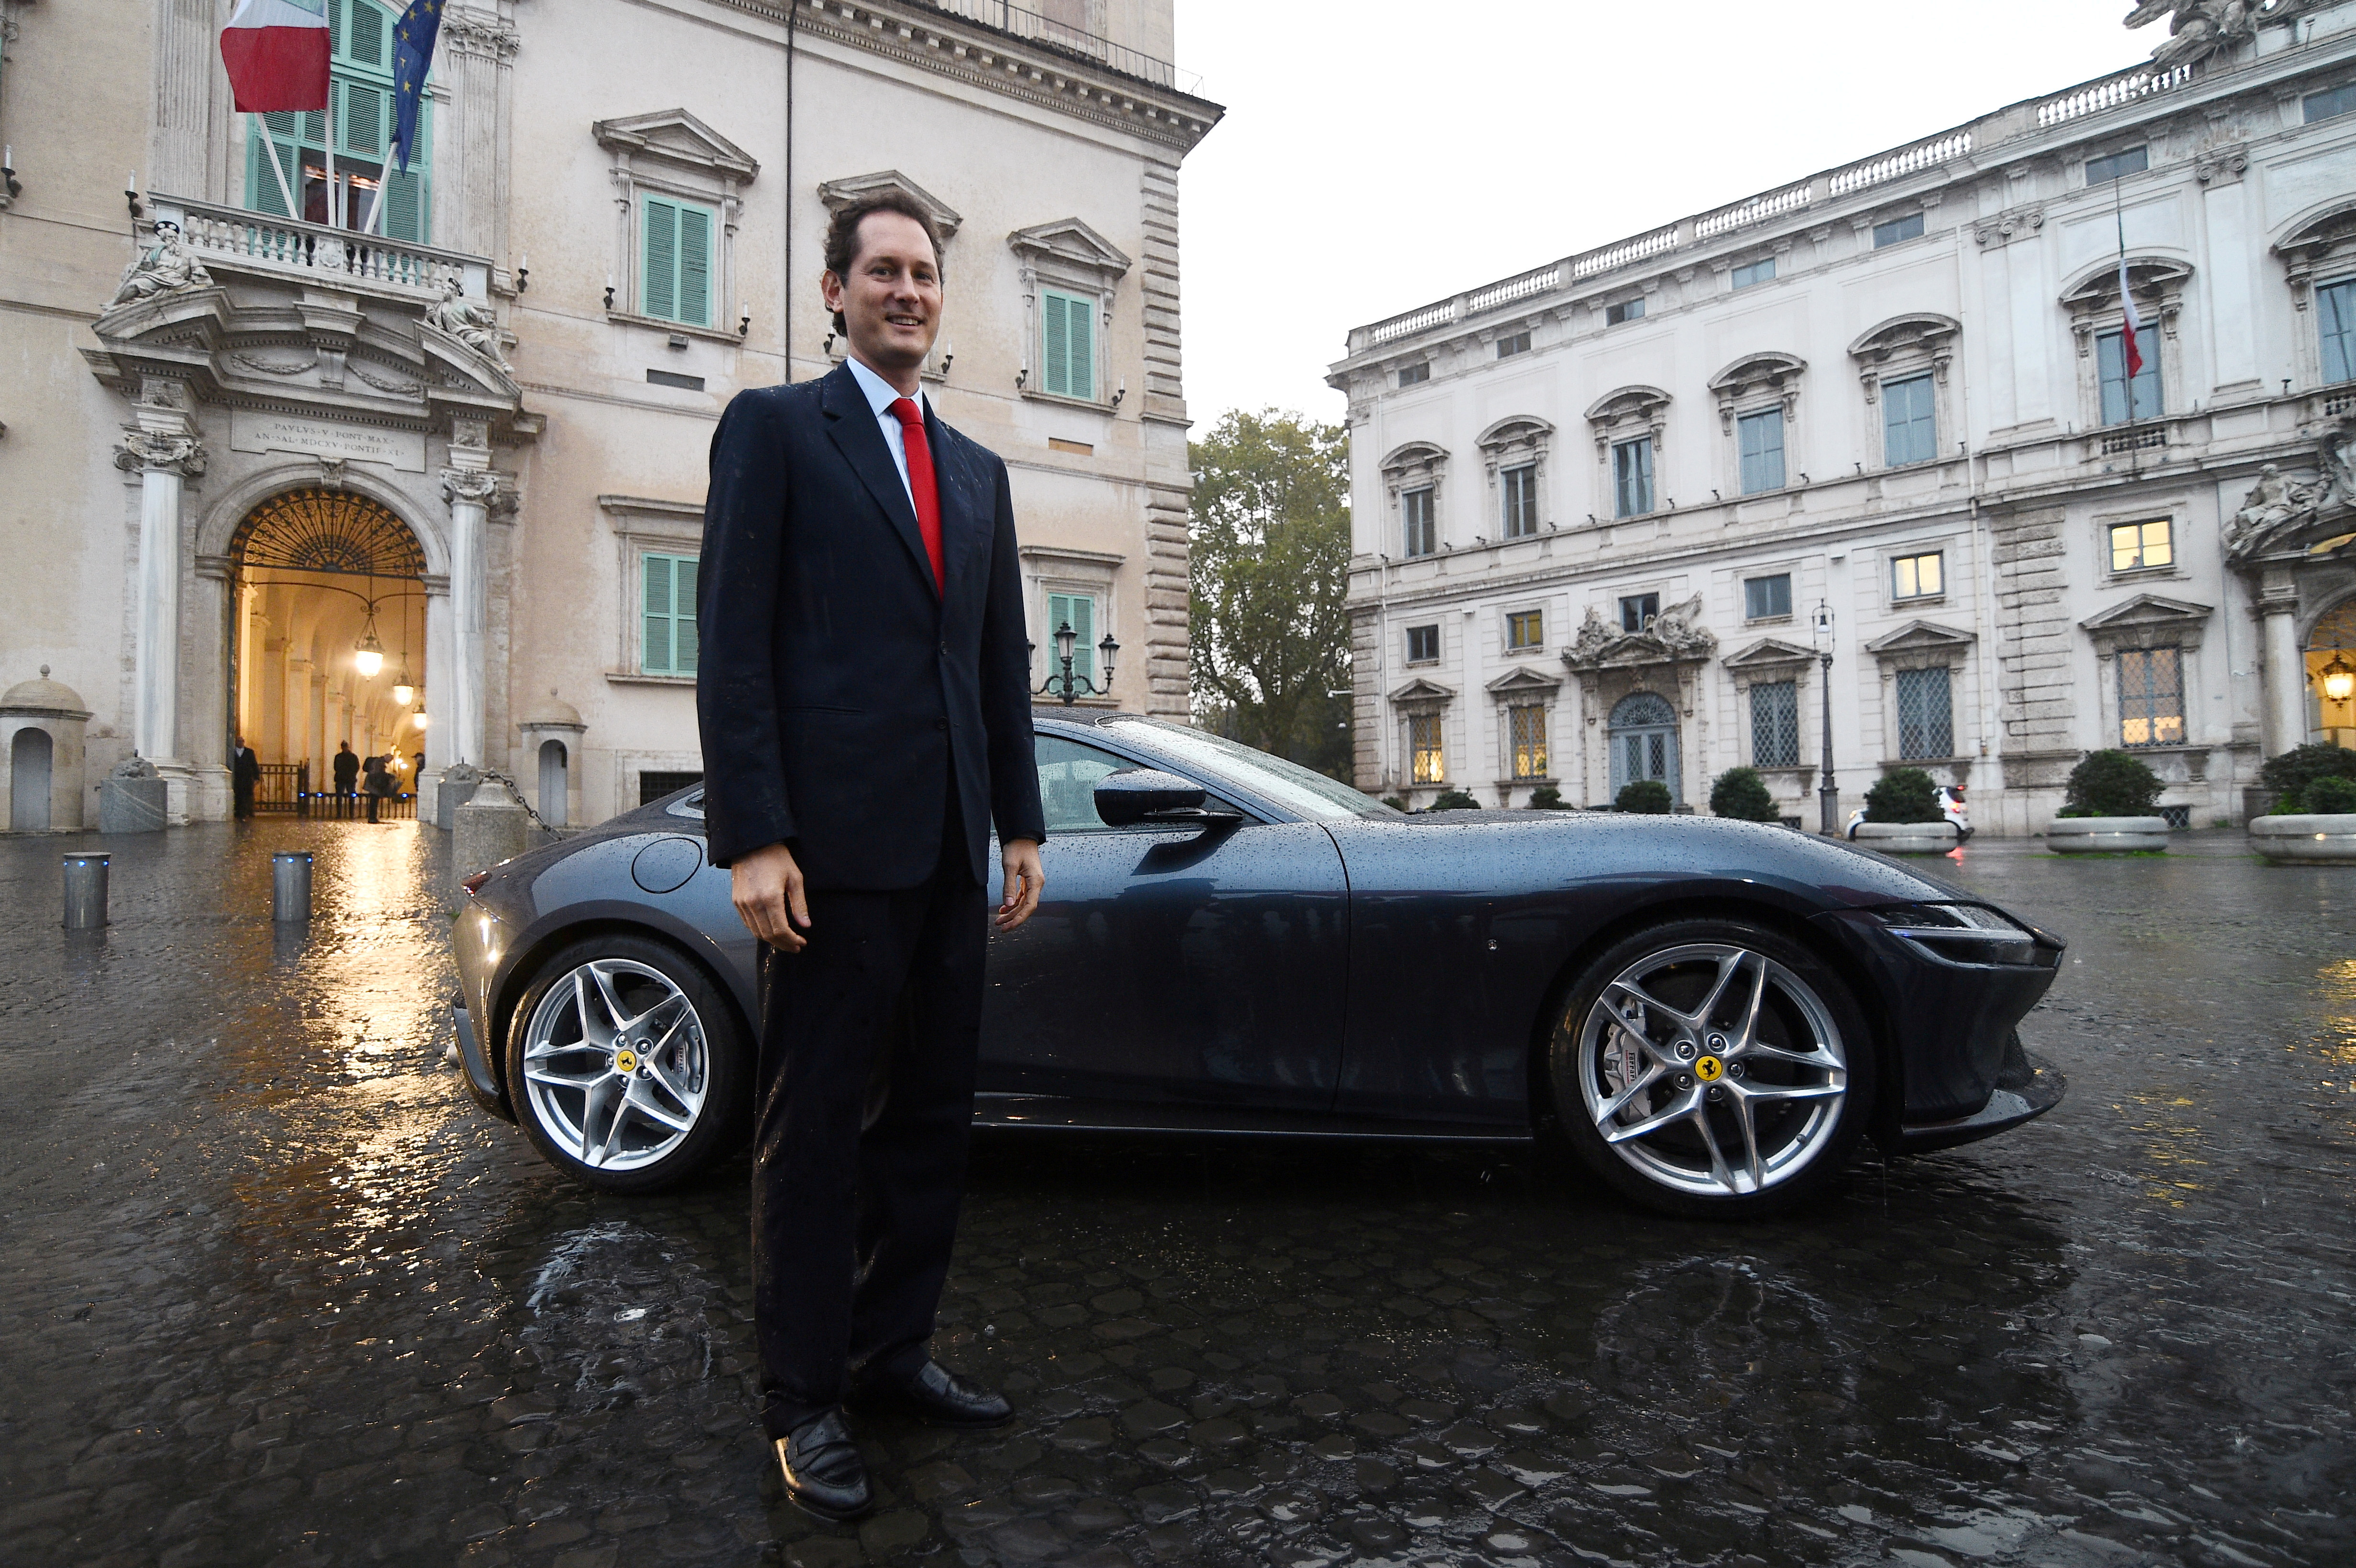 Fiat Chrysler chairman John Elkann poses next to the new Ferrari Roma outside the Quirinale Presidential Palace in Rome